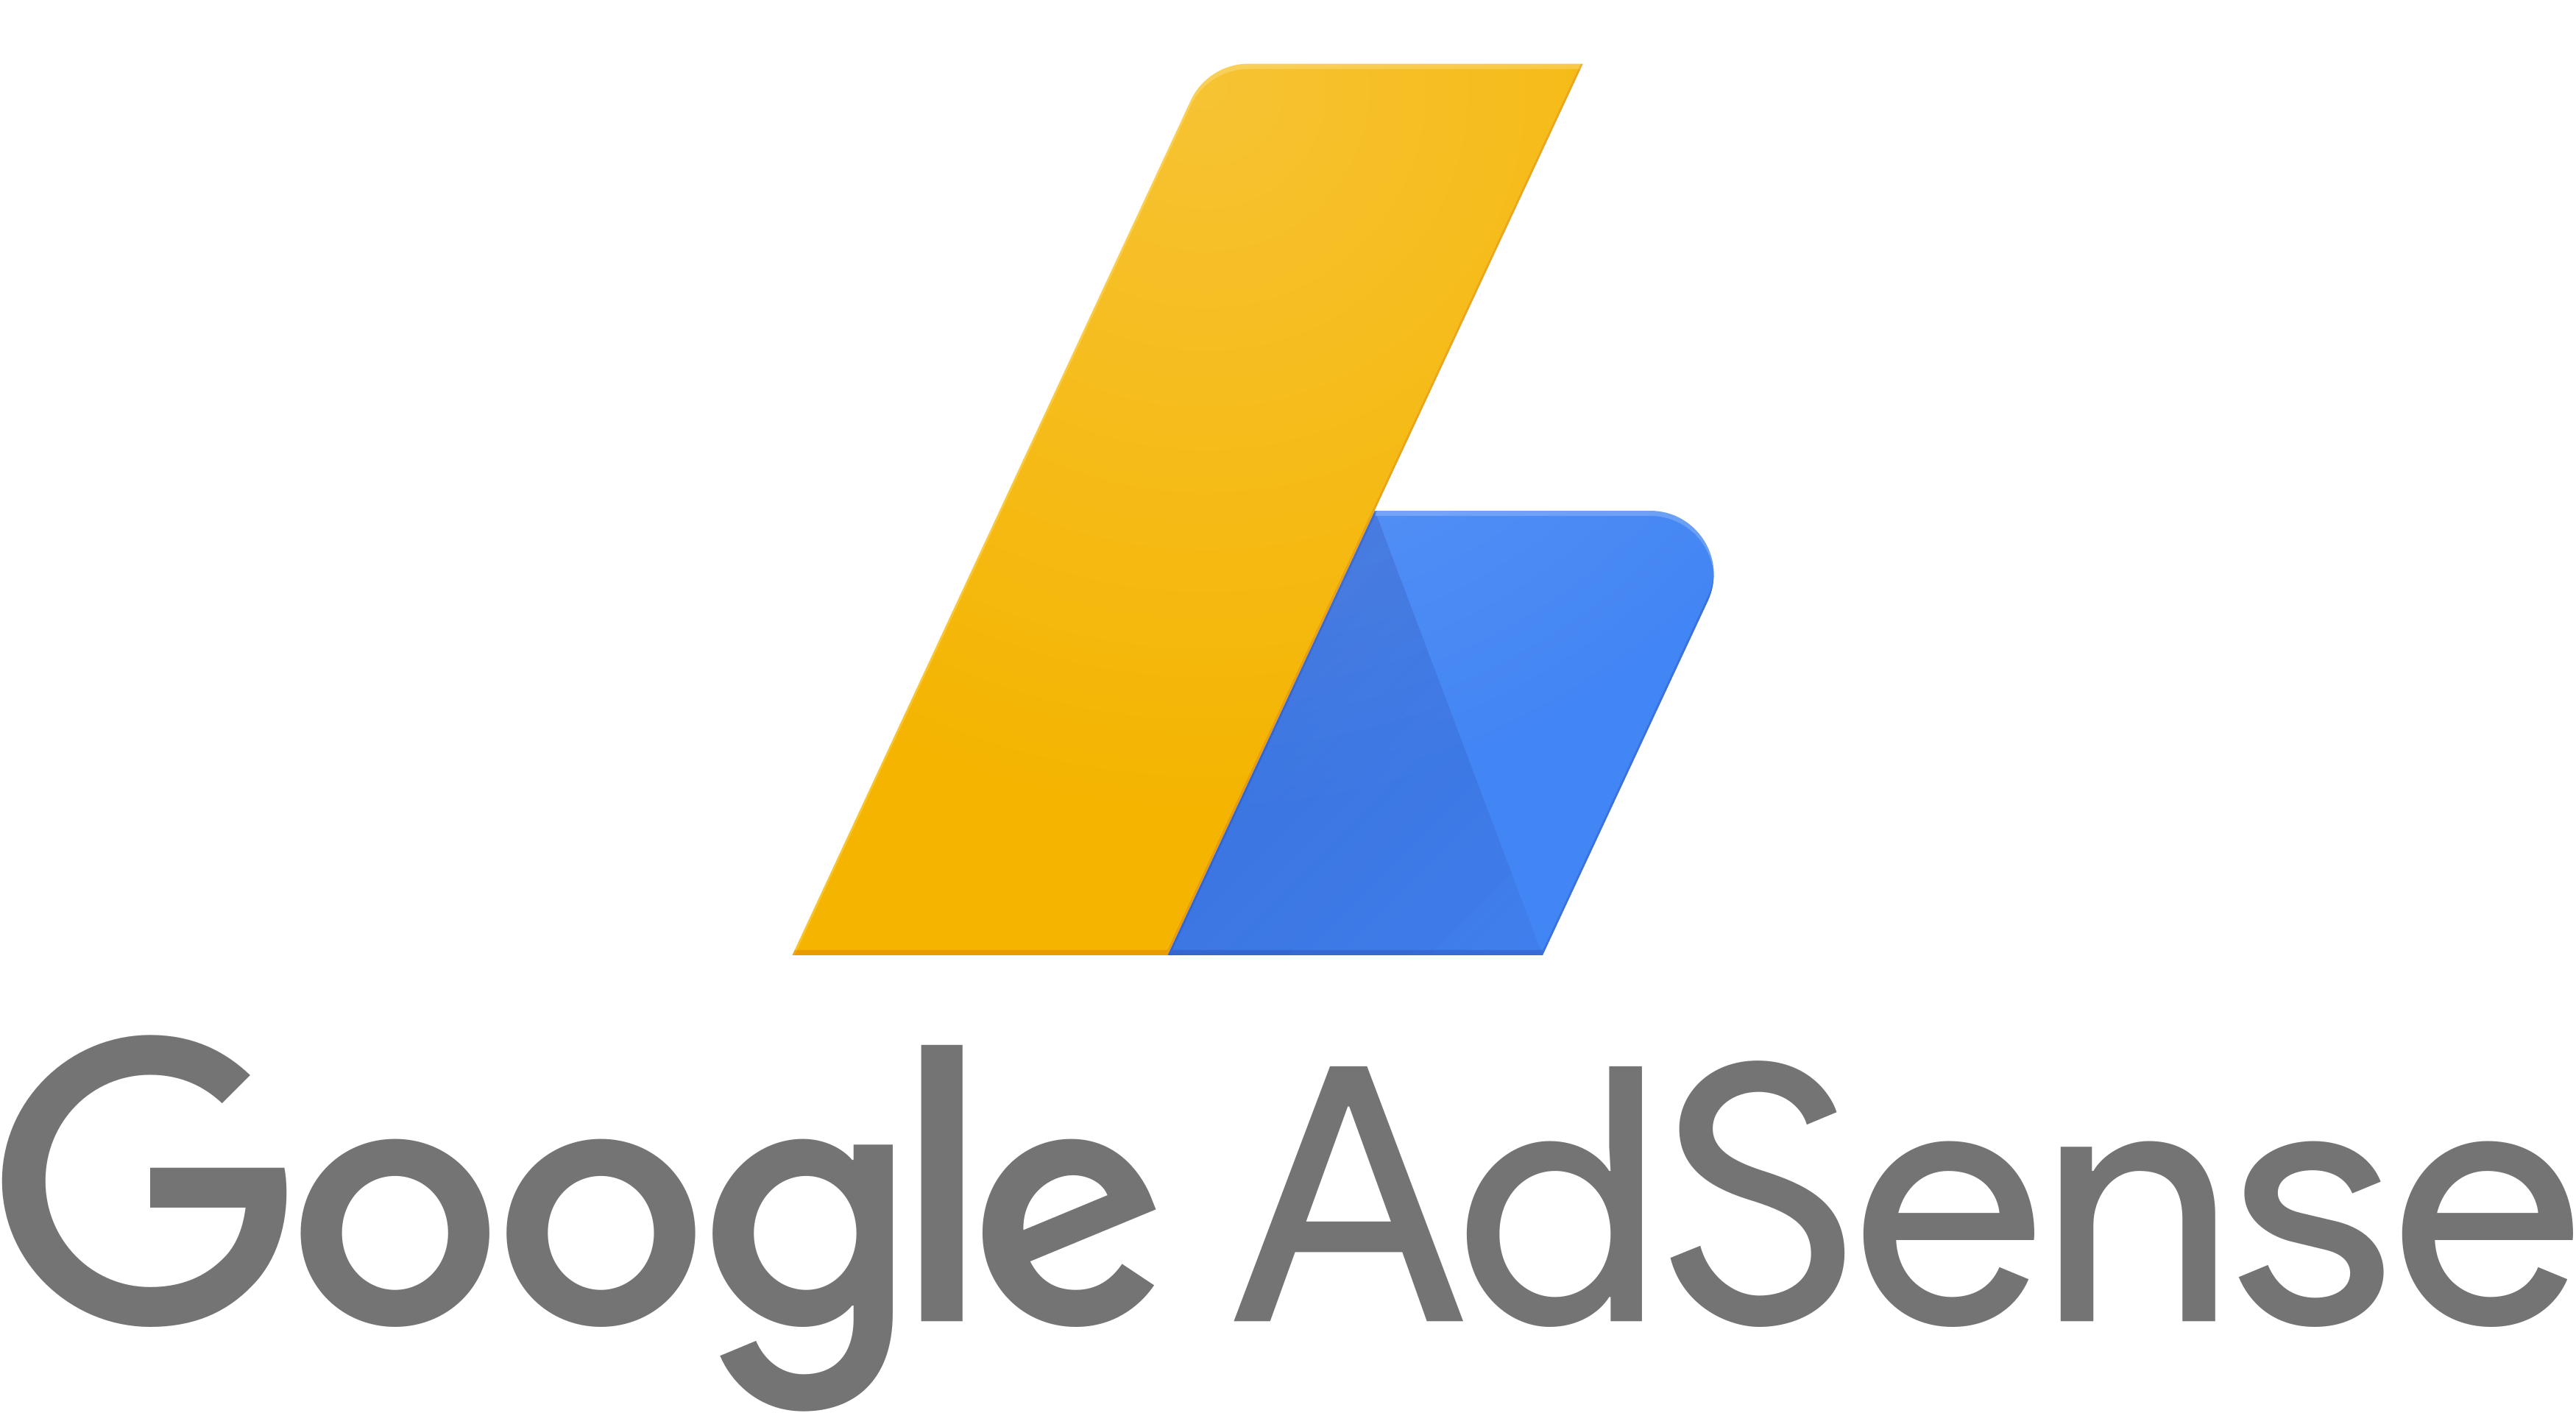 Google Adsense Logo - Google Adsense Account Approval: How To Make The Adsense Team Like ...